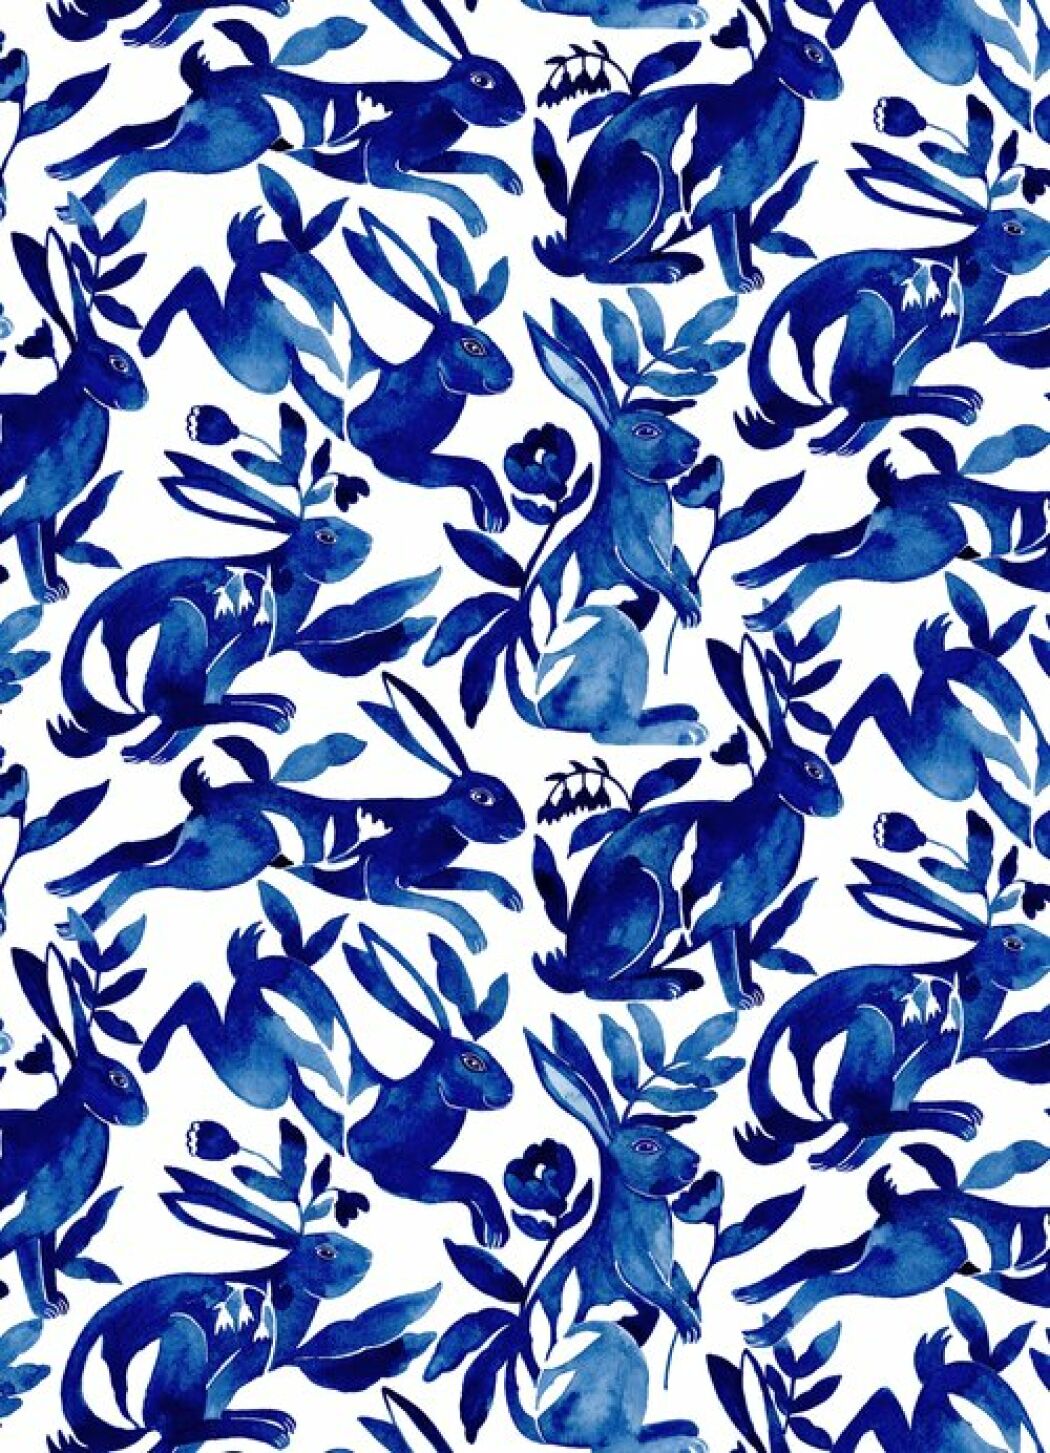 Blue rabbit pattern illustrated by the artist Malin Gyllensvaan